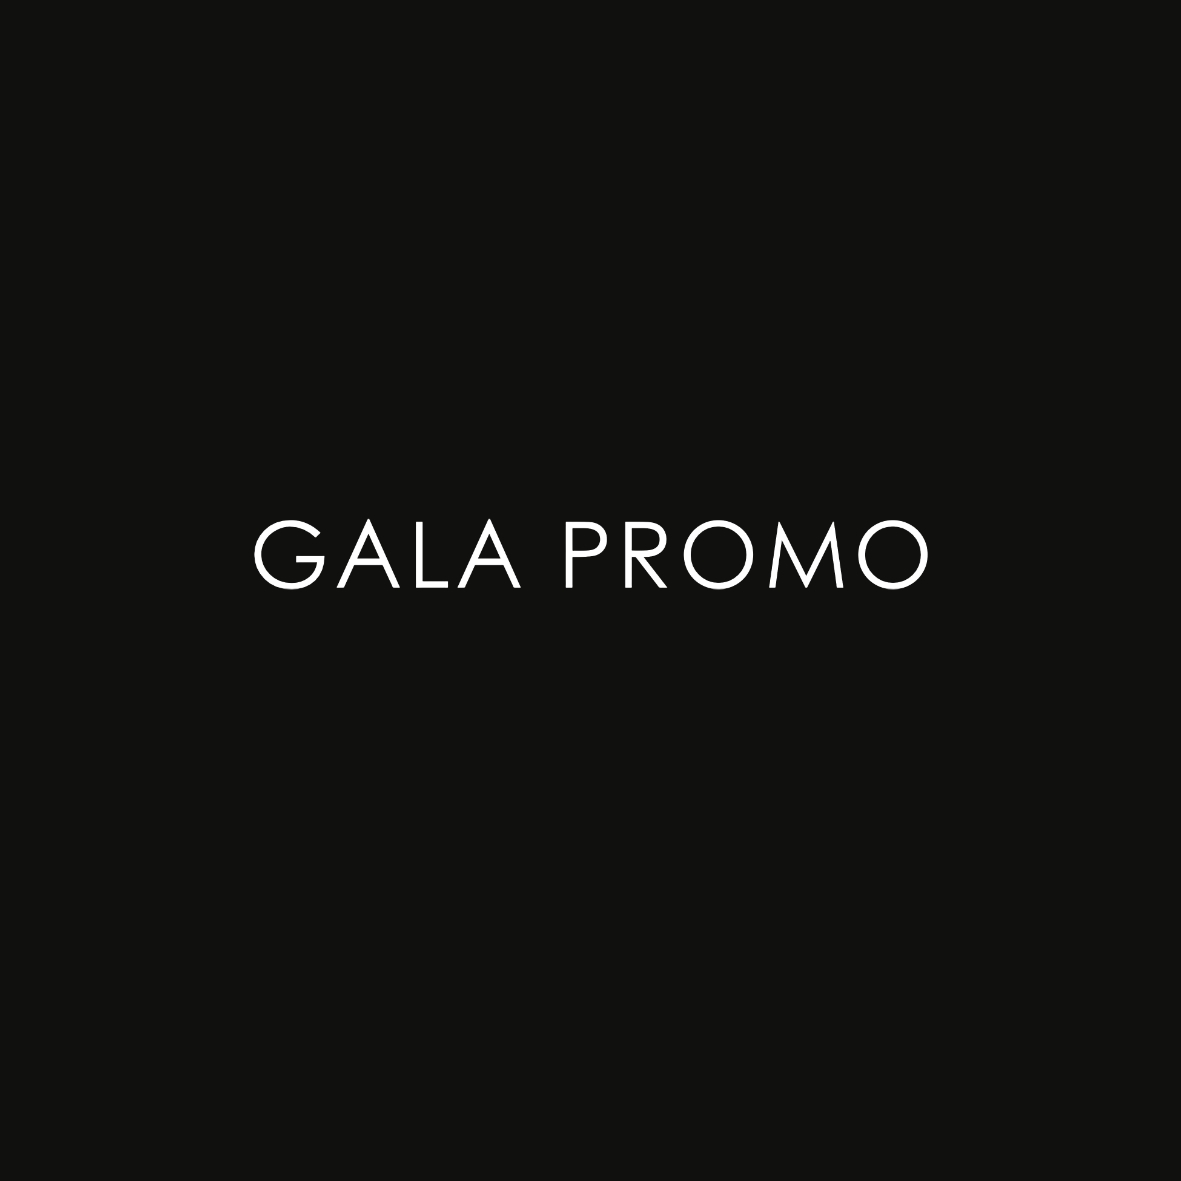 GALA promo group